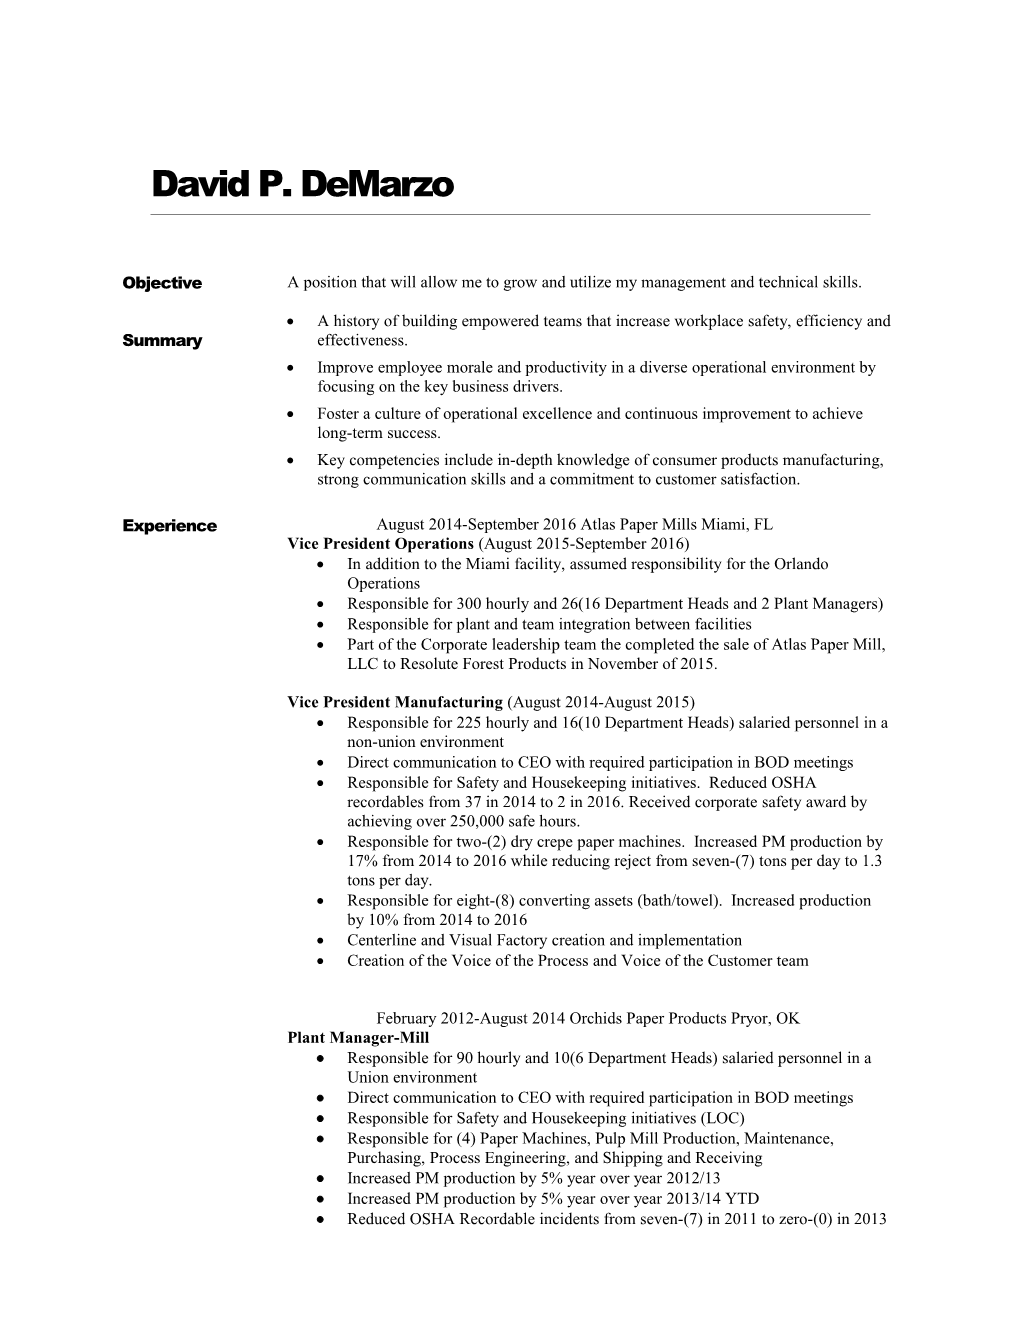 David P. Demarzo